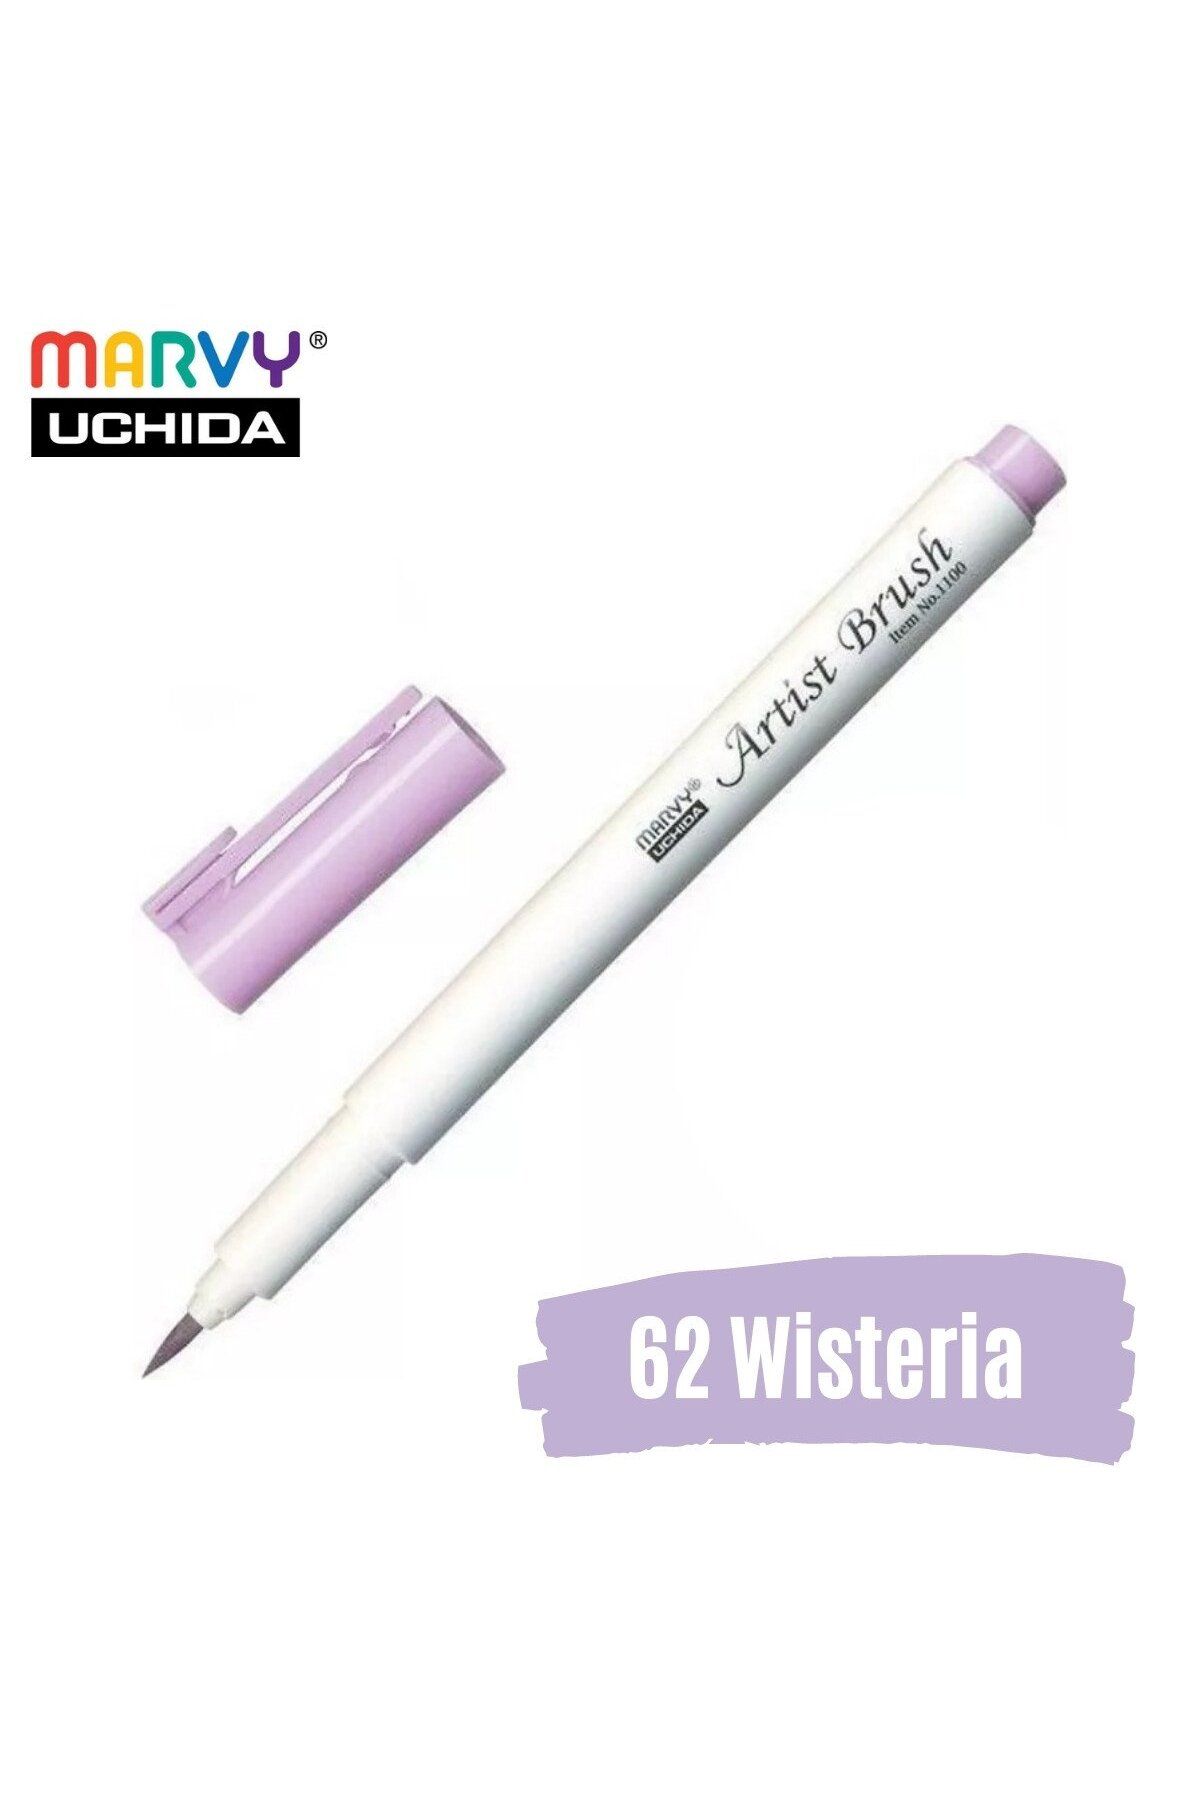 Marvy Artist Brush Pen 1100 Firça Uçlu Kalem 62 Wisteria